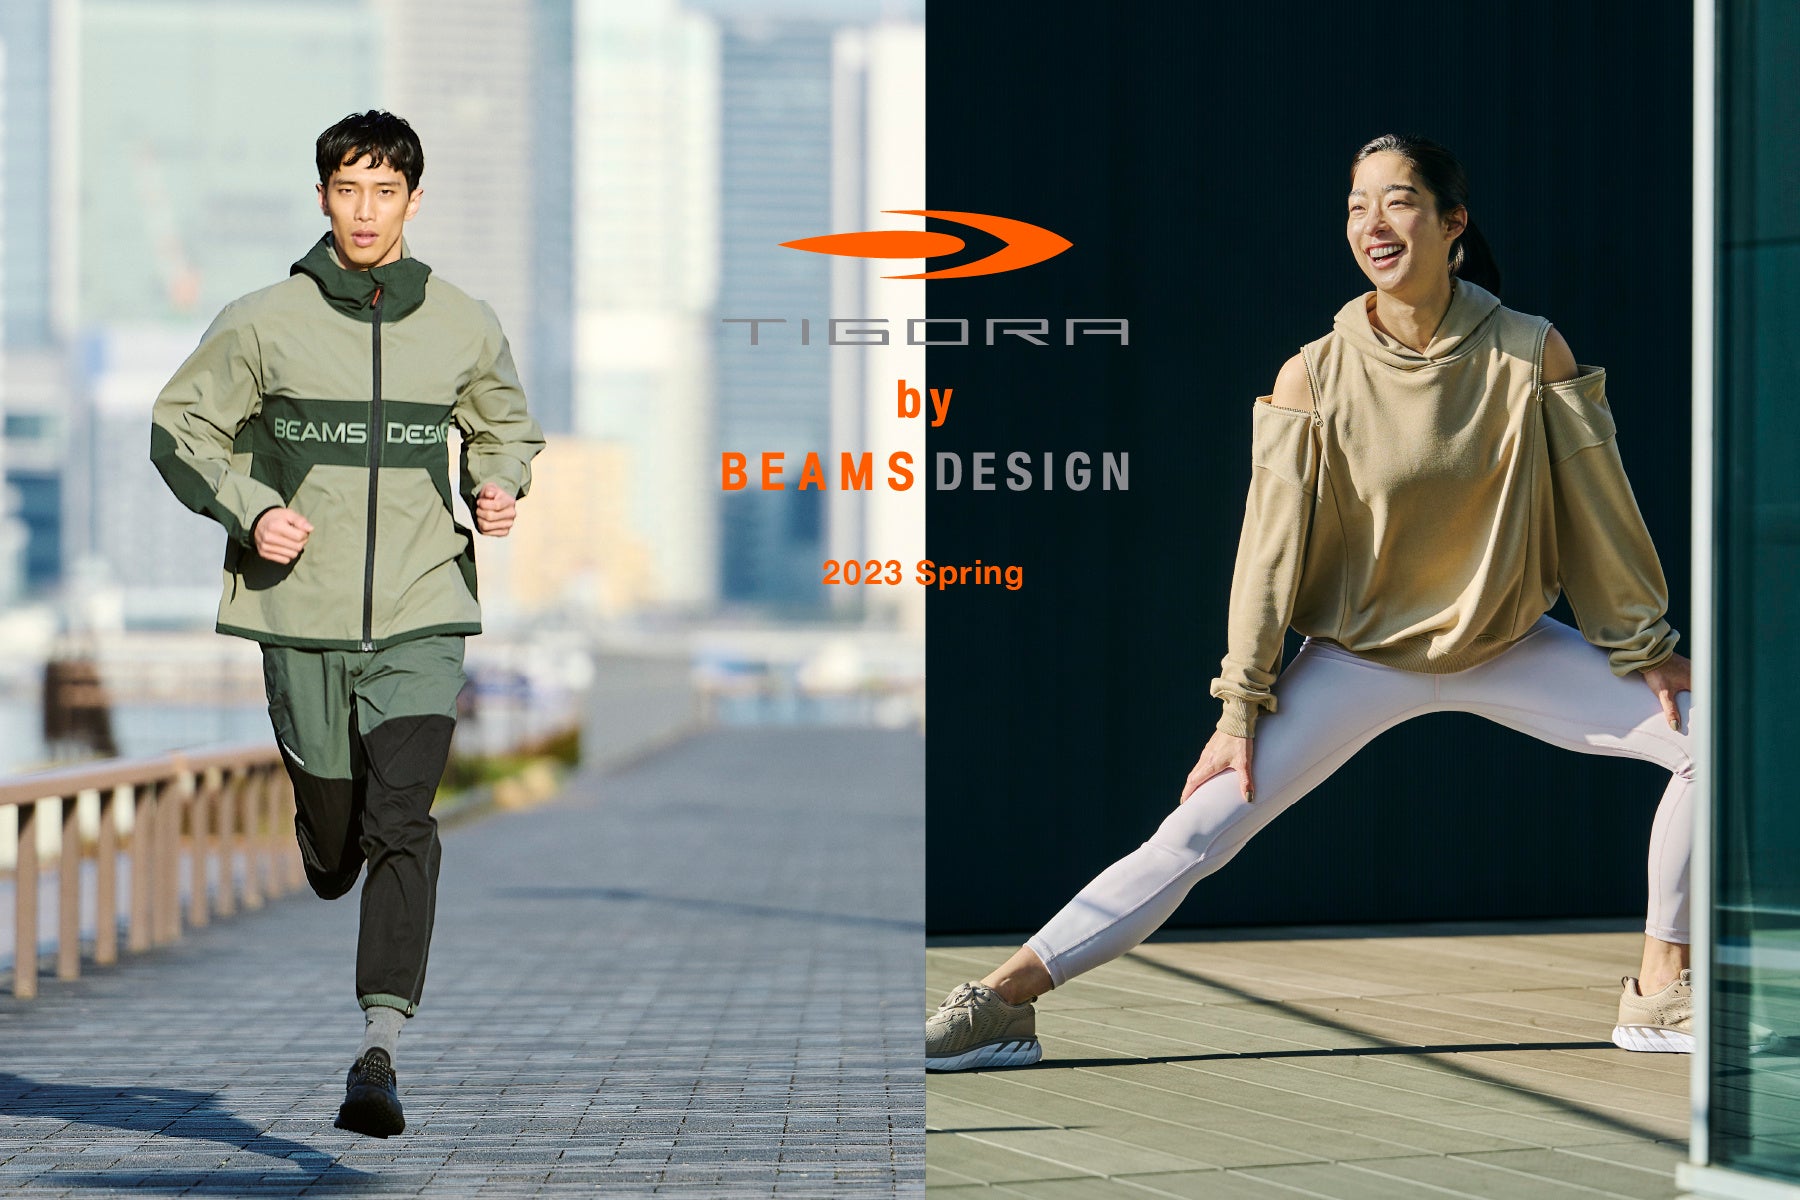 『TIGORA by BEAMS DESIGN』スポーツシーンと日々のライフスタイルを快適にするテックウェアでアスレジャーファッションを提案！2023年春夏コレクションを3月より順次発売！のサブ画像1